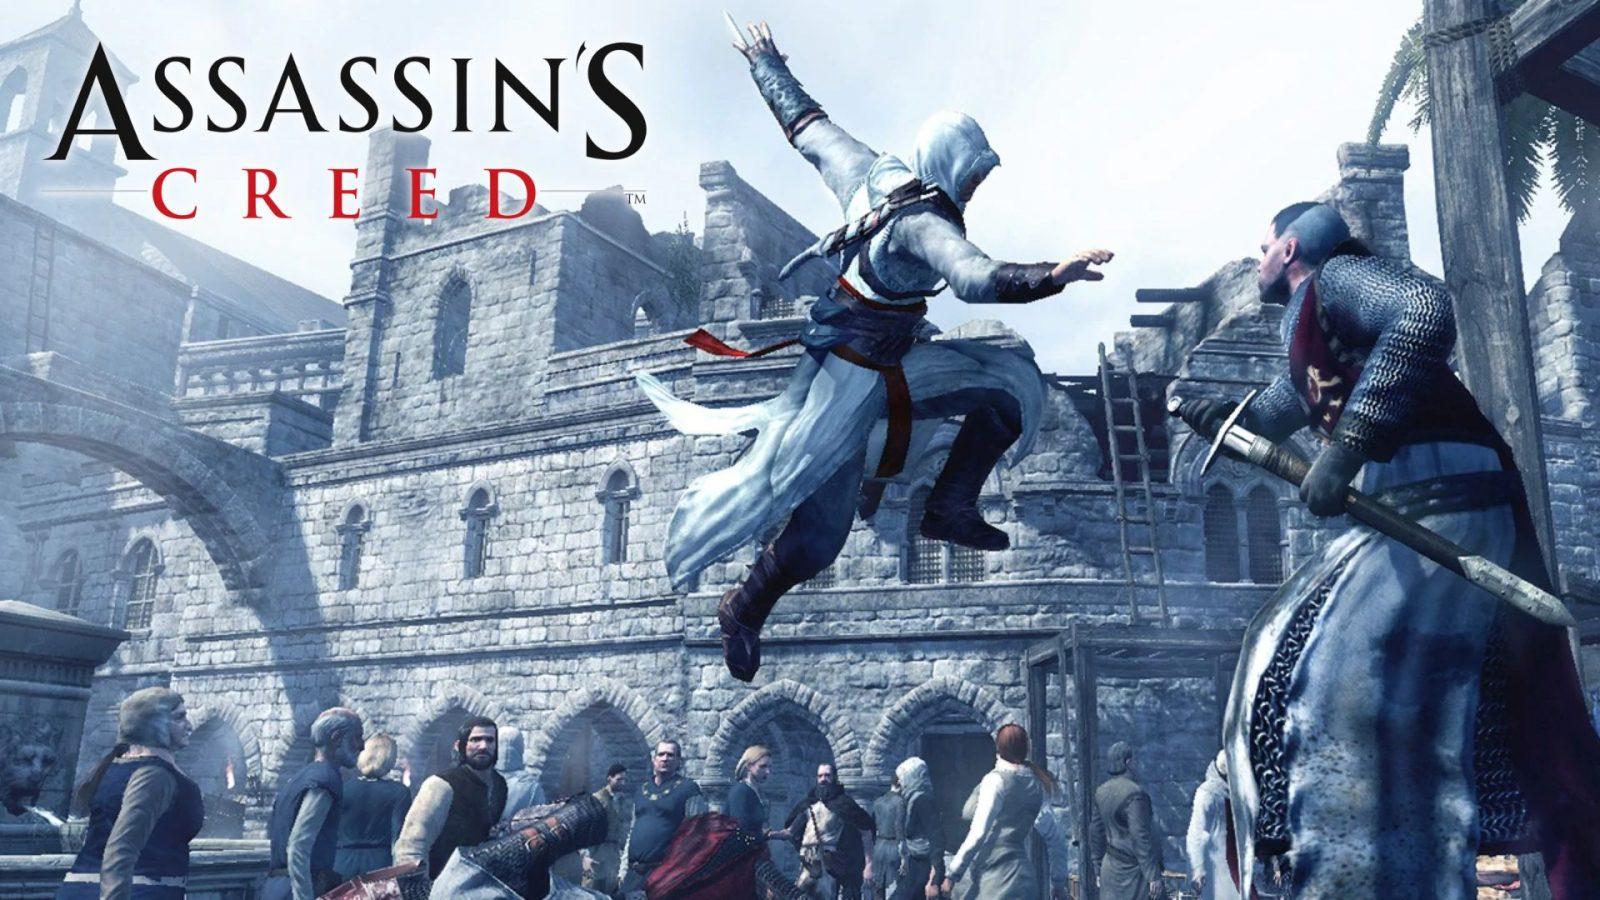 Assassin's creed 1 deserves a remake : r/assassinscreed